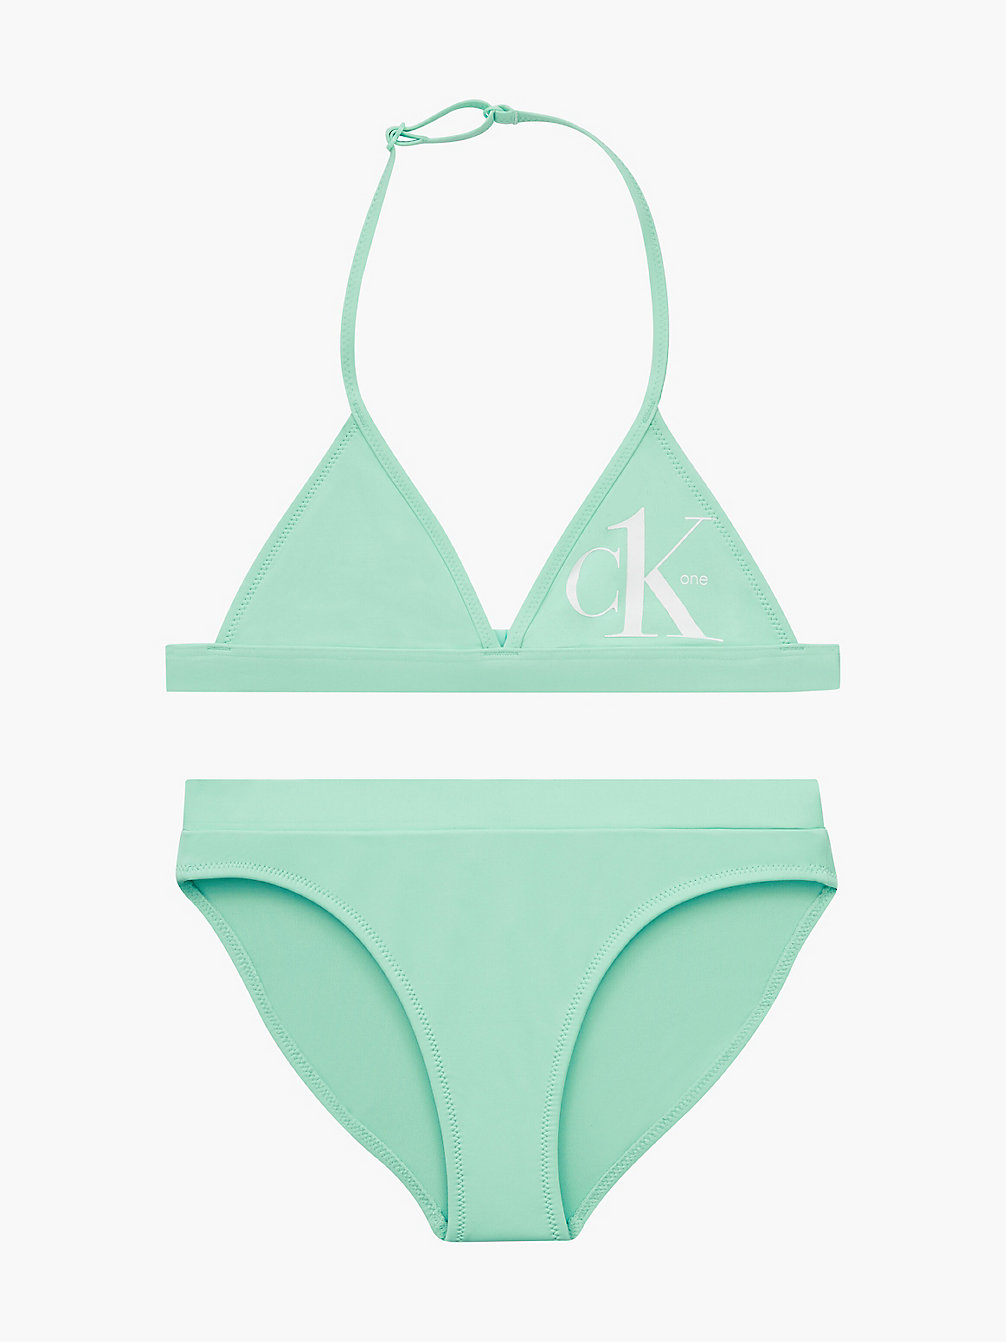 CLEAR LAGOON Girls Triangle Bikini Set - CK One undefined girls Calvin Klein